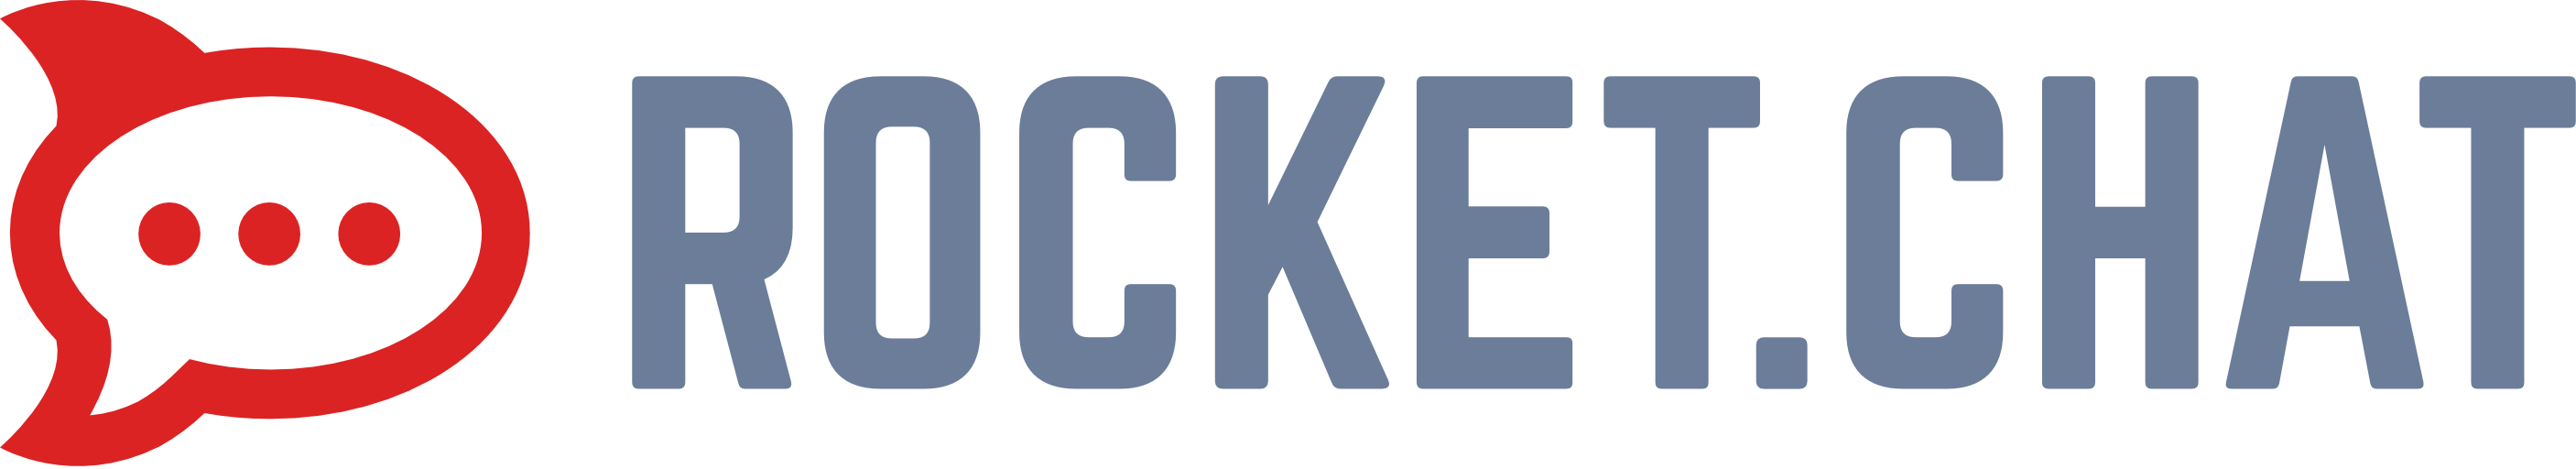 give rocketchat server a url